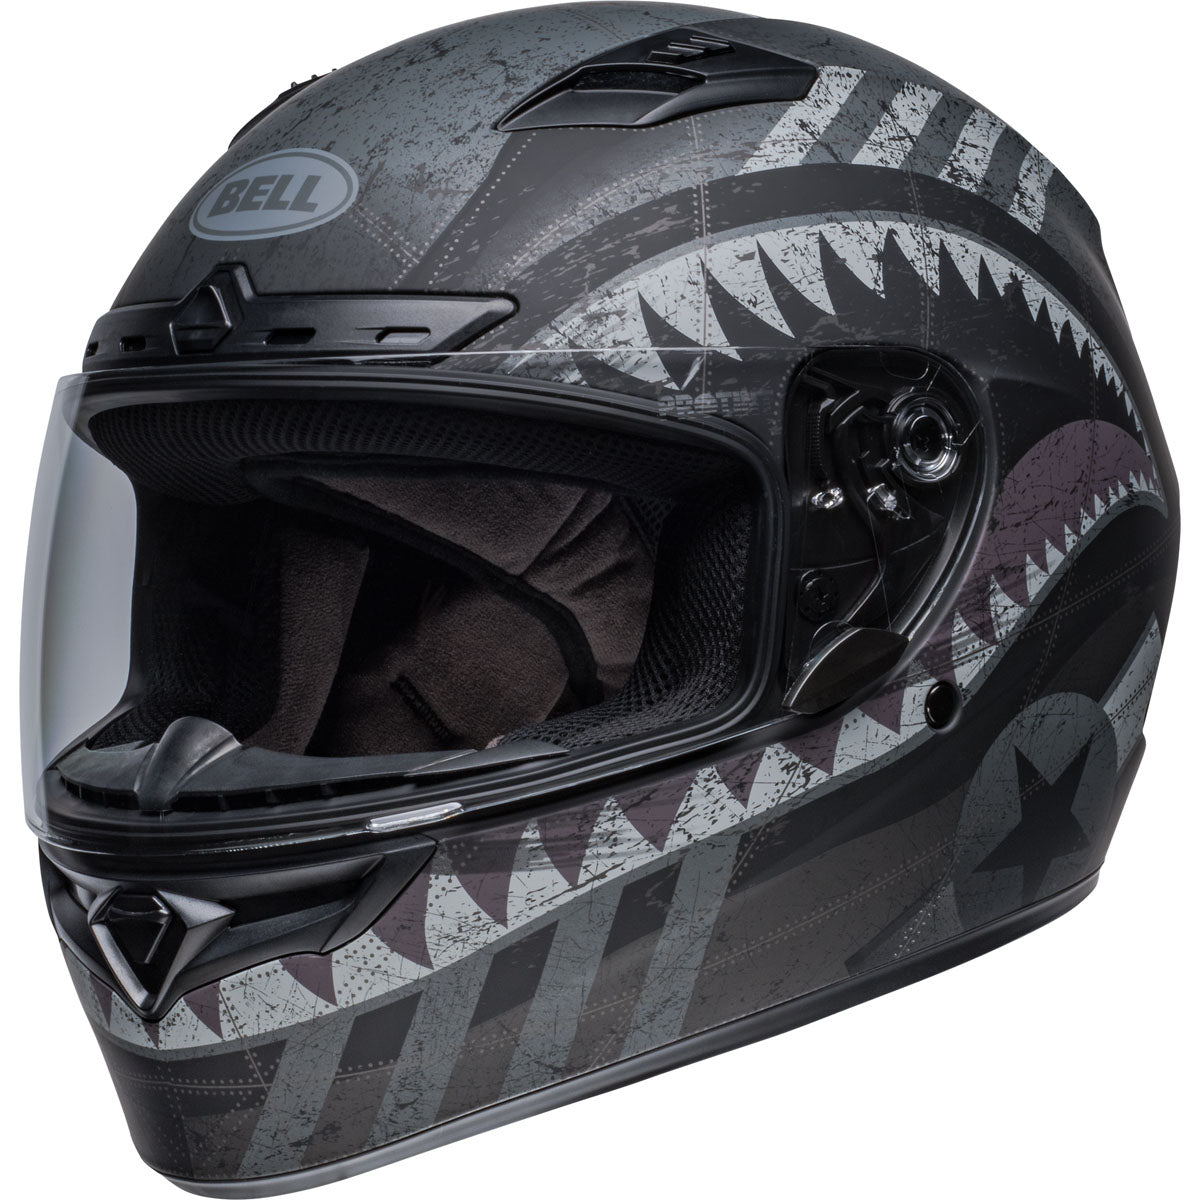 Bell Qualifier DLX MIPS Devil May Care Helmet - Matte Black/Gray